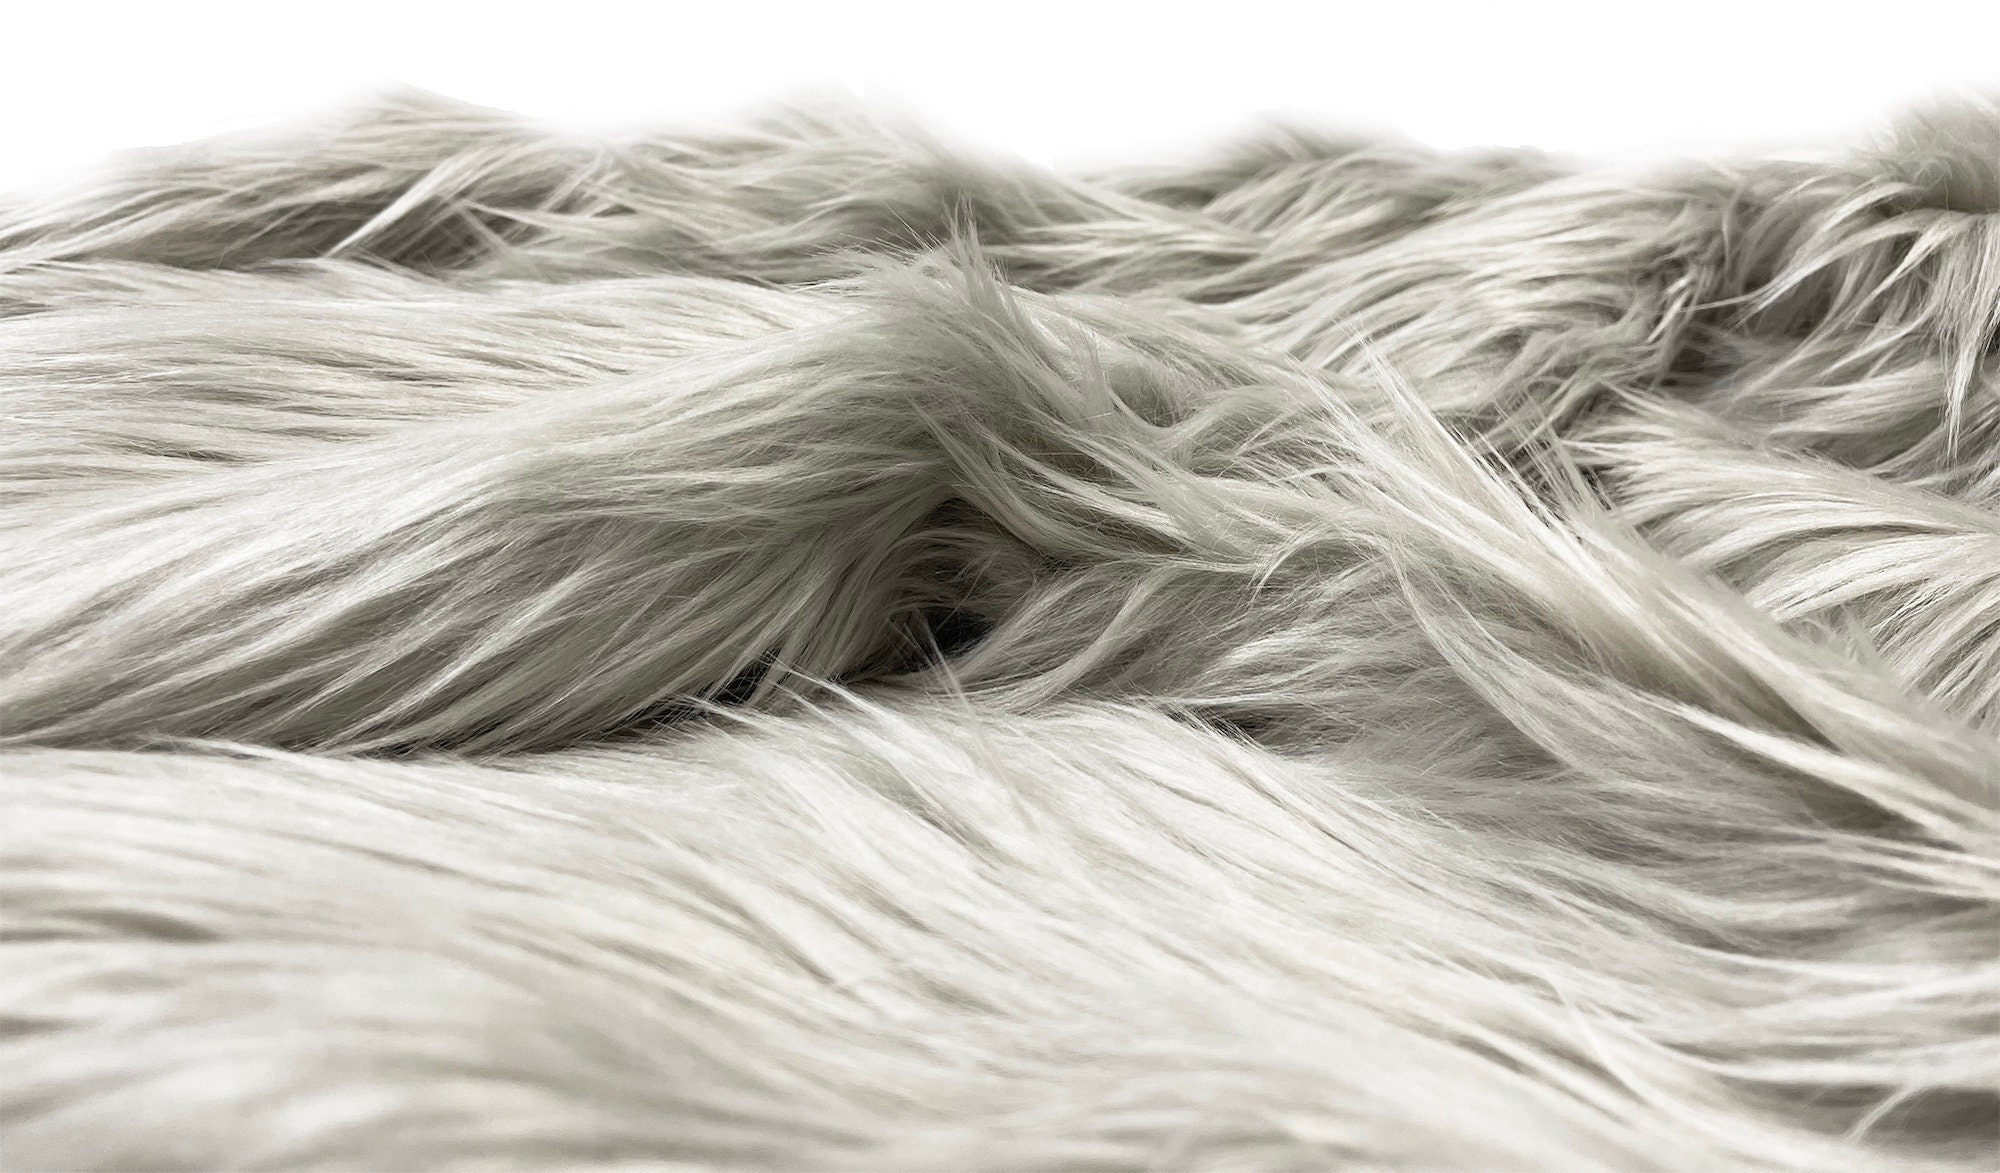 Eovea Shaggy Faux Fur Fabric White One Yard DIY Craft Supply